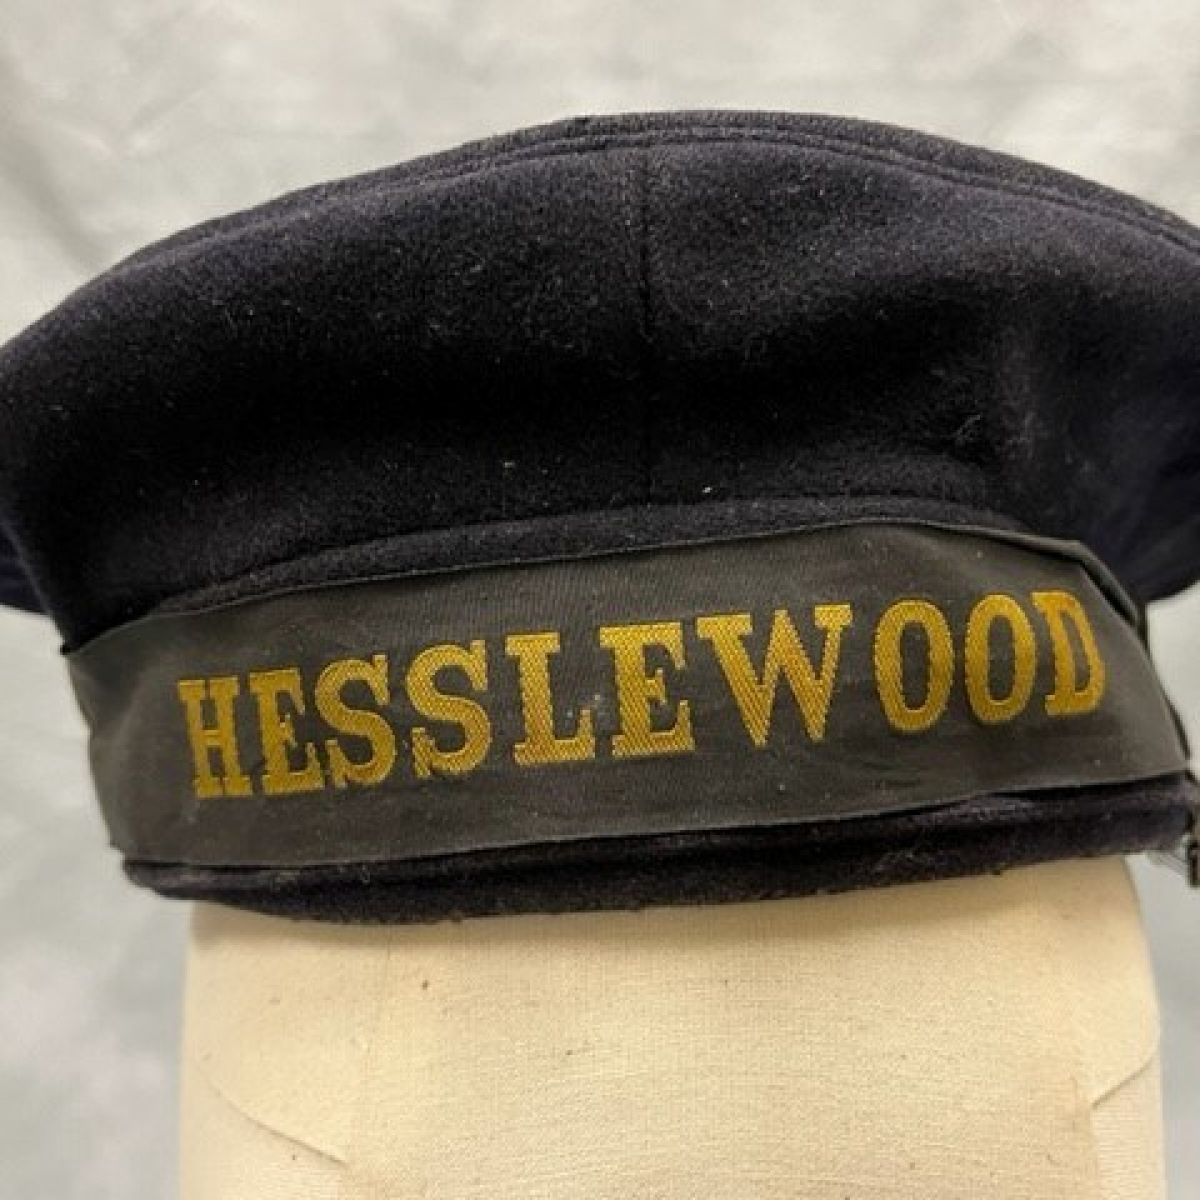 Hesslewood Orphanage Boys hat